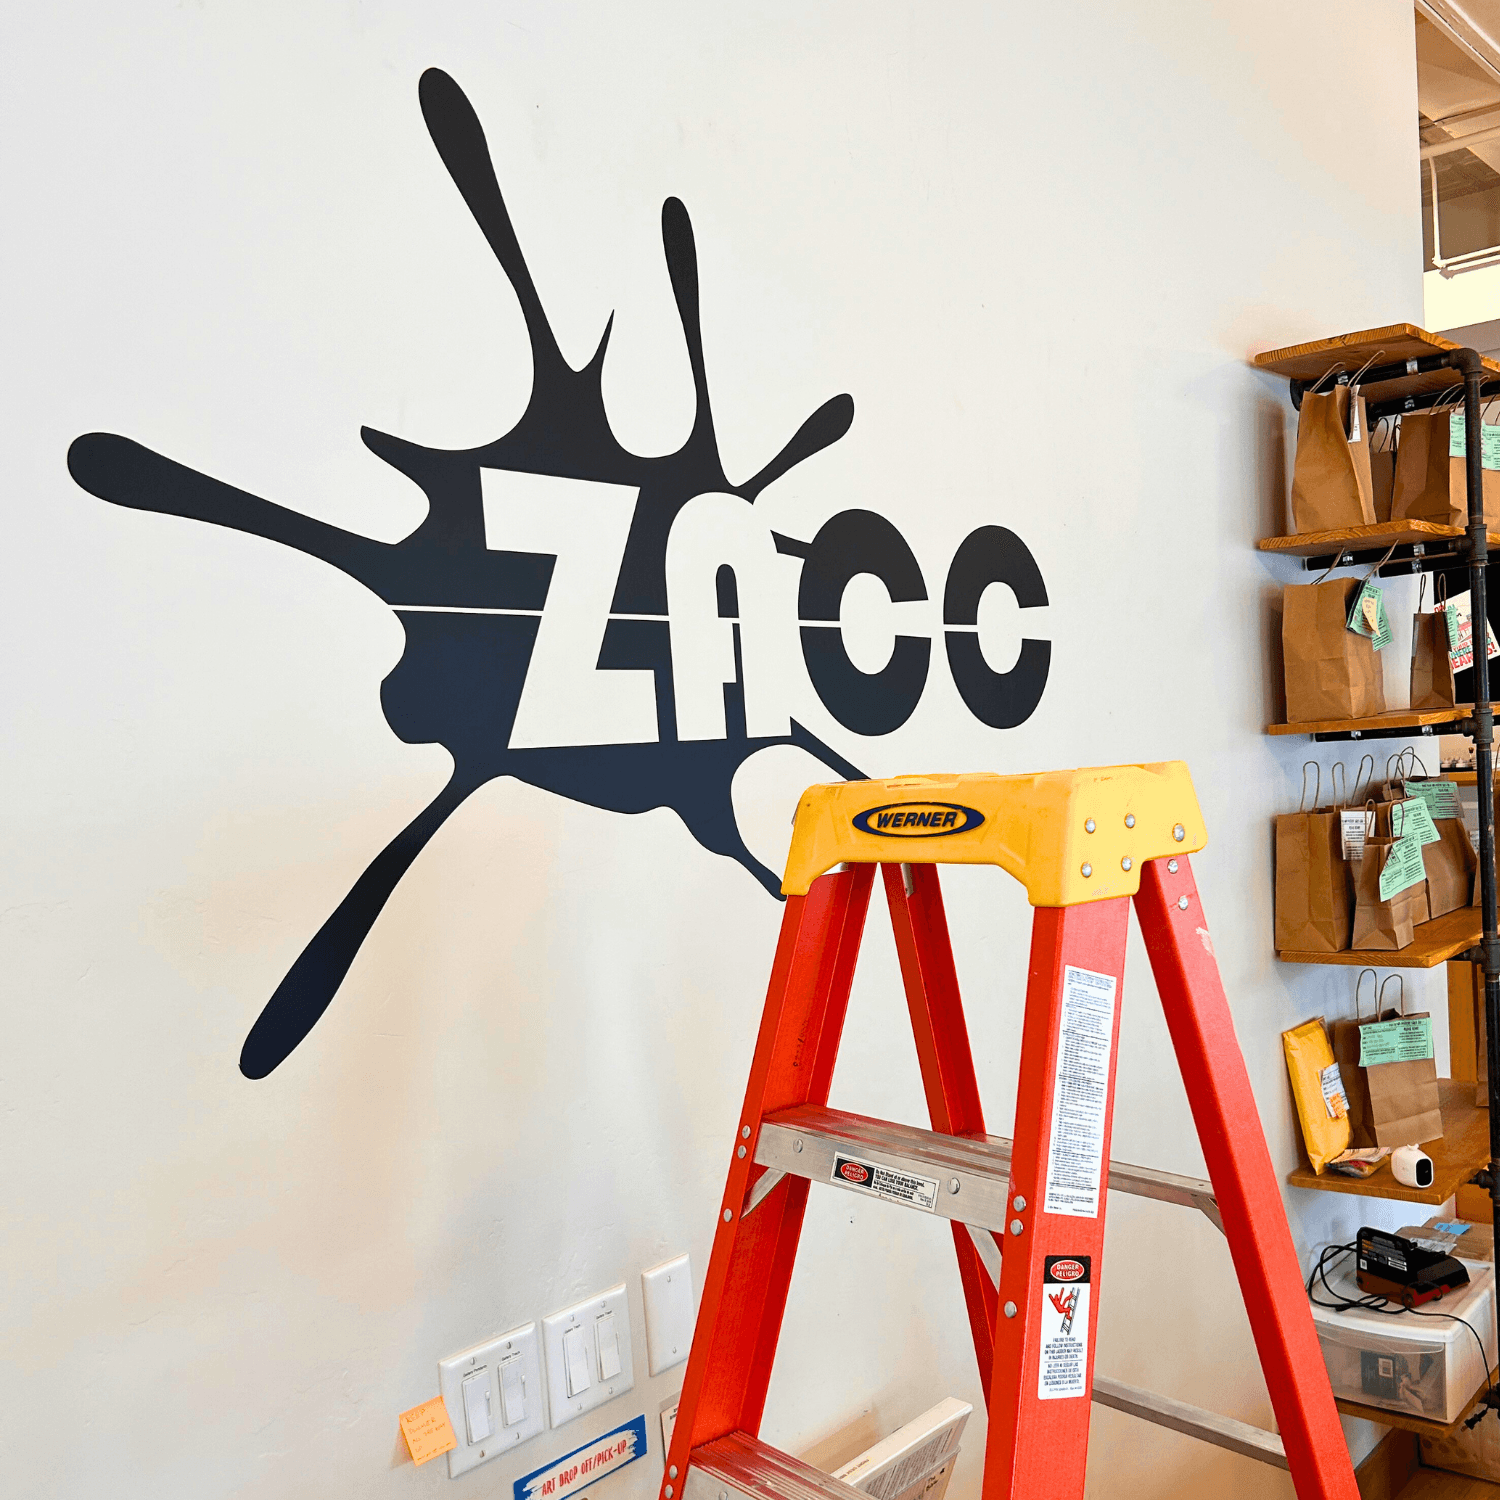 ZACC logo ladder